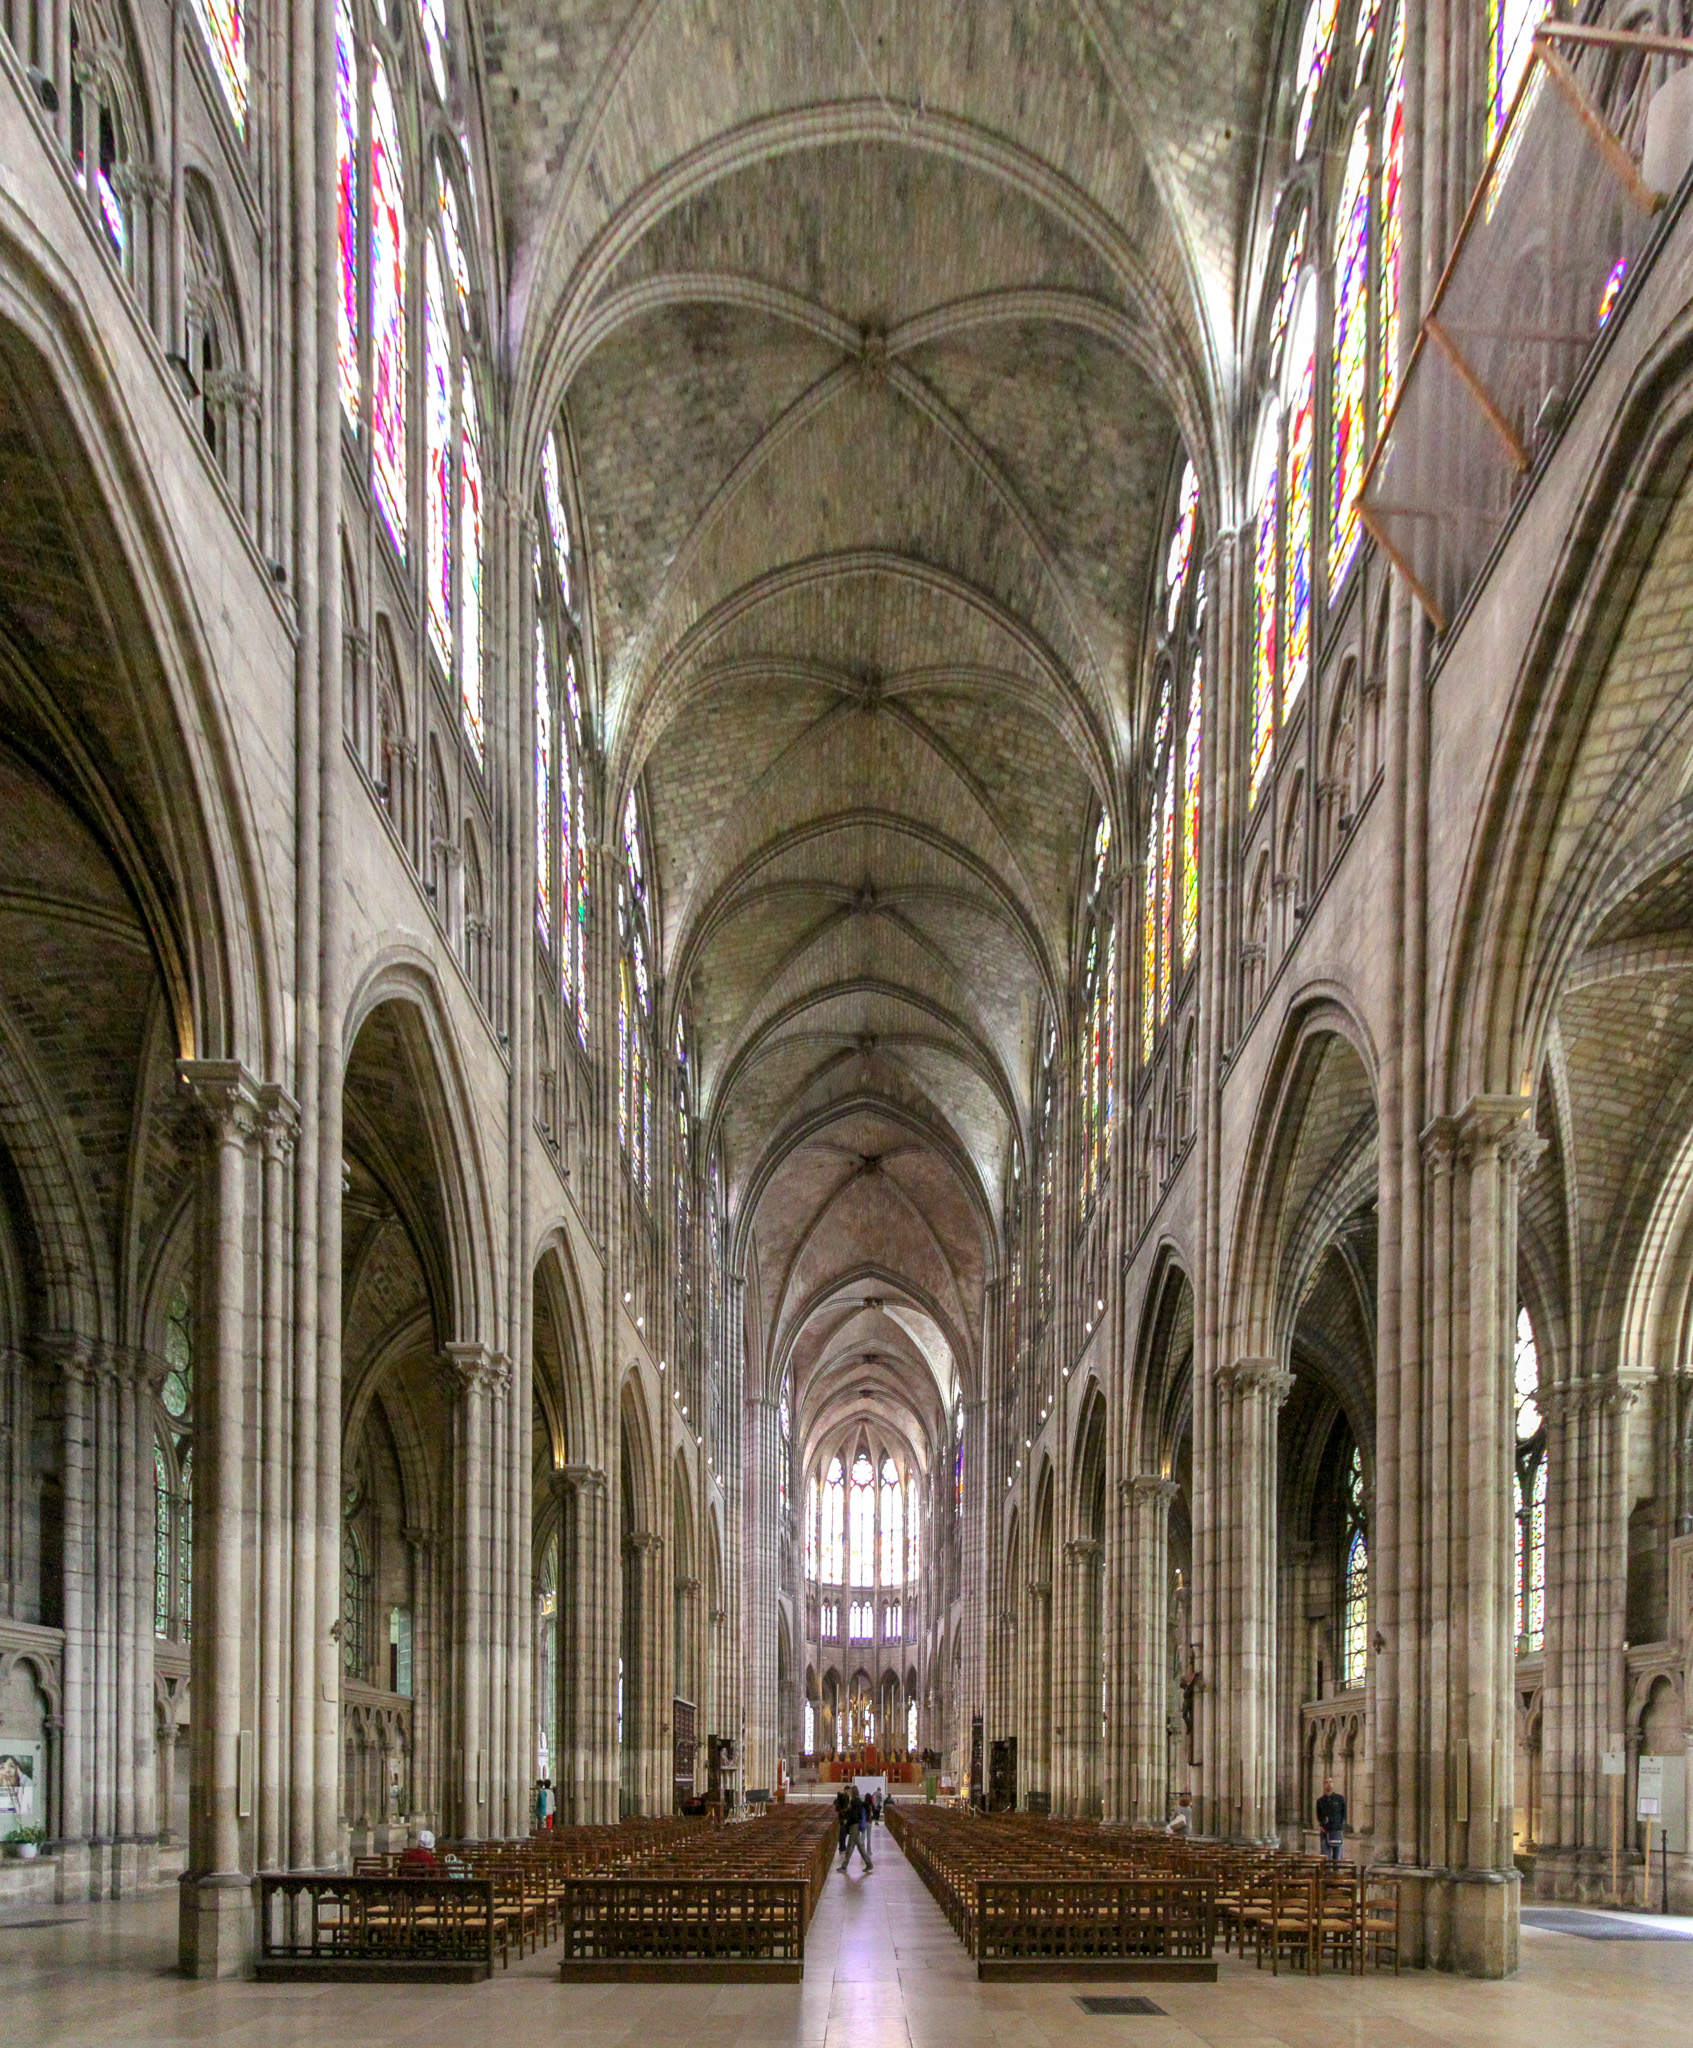 The interior of the Saint-Denis Basilica